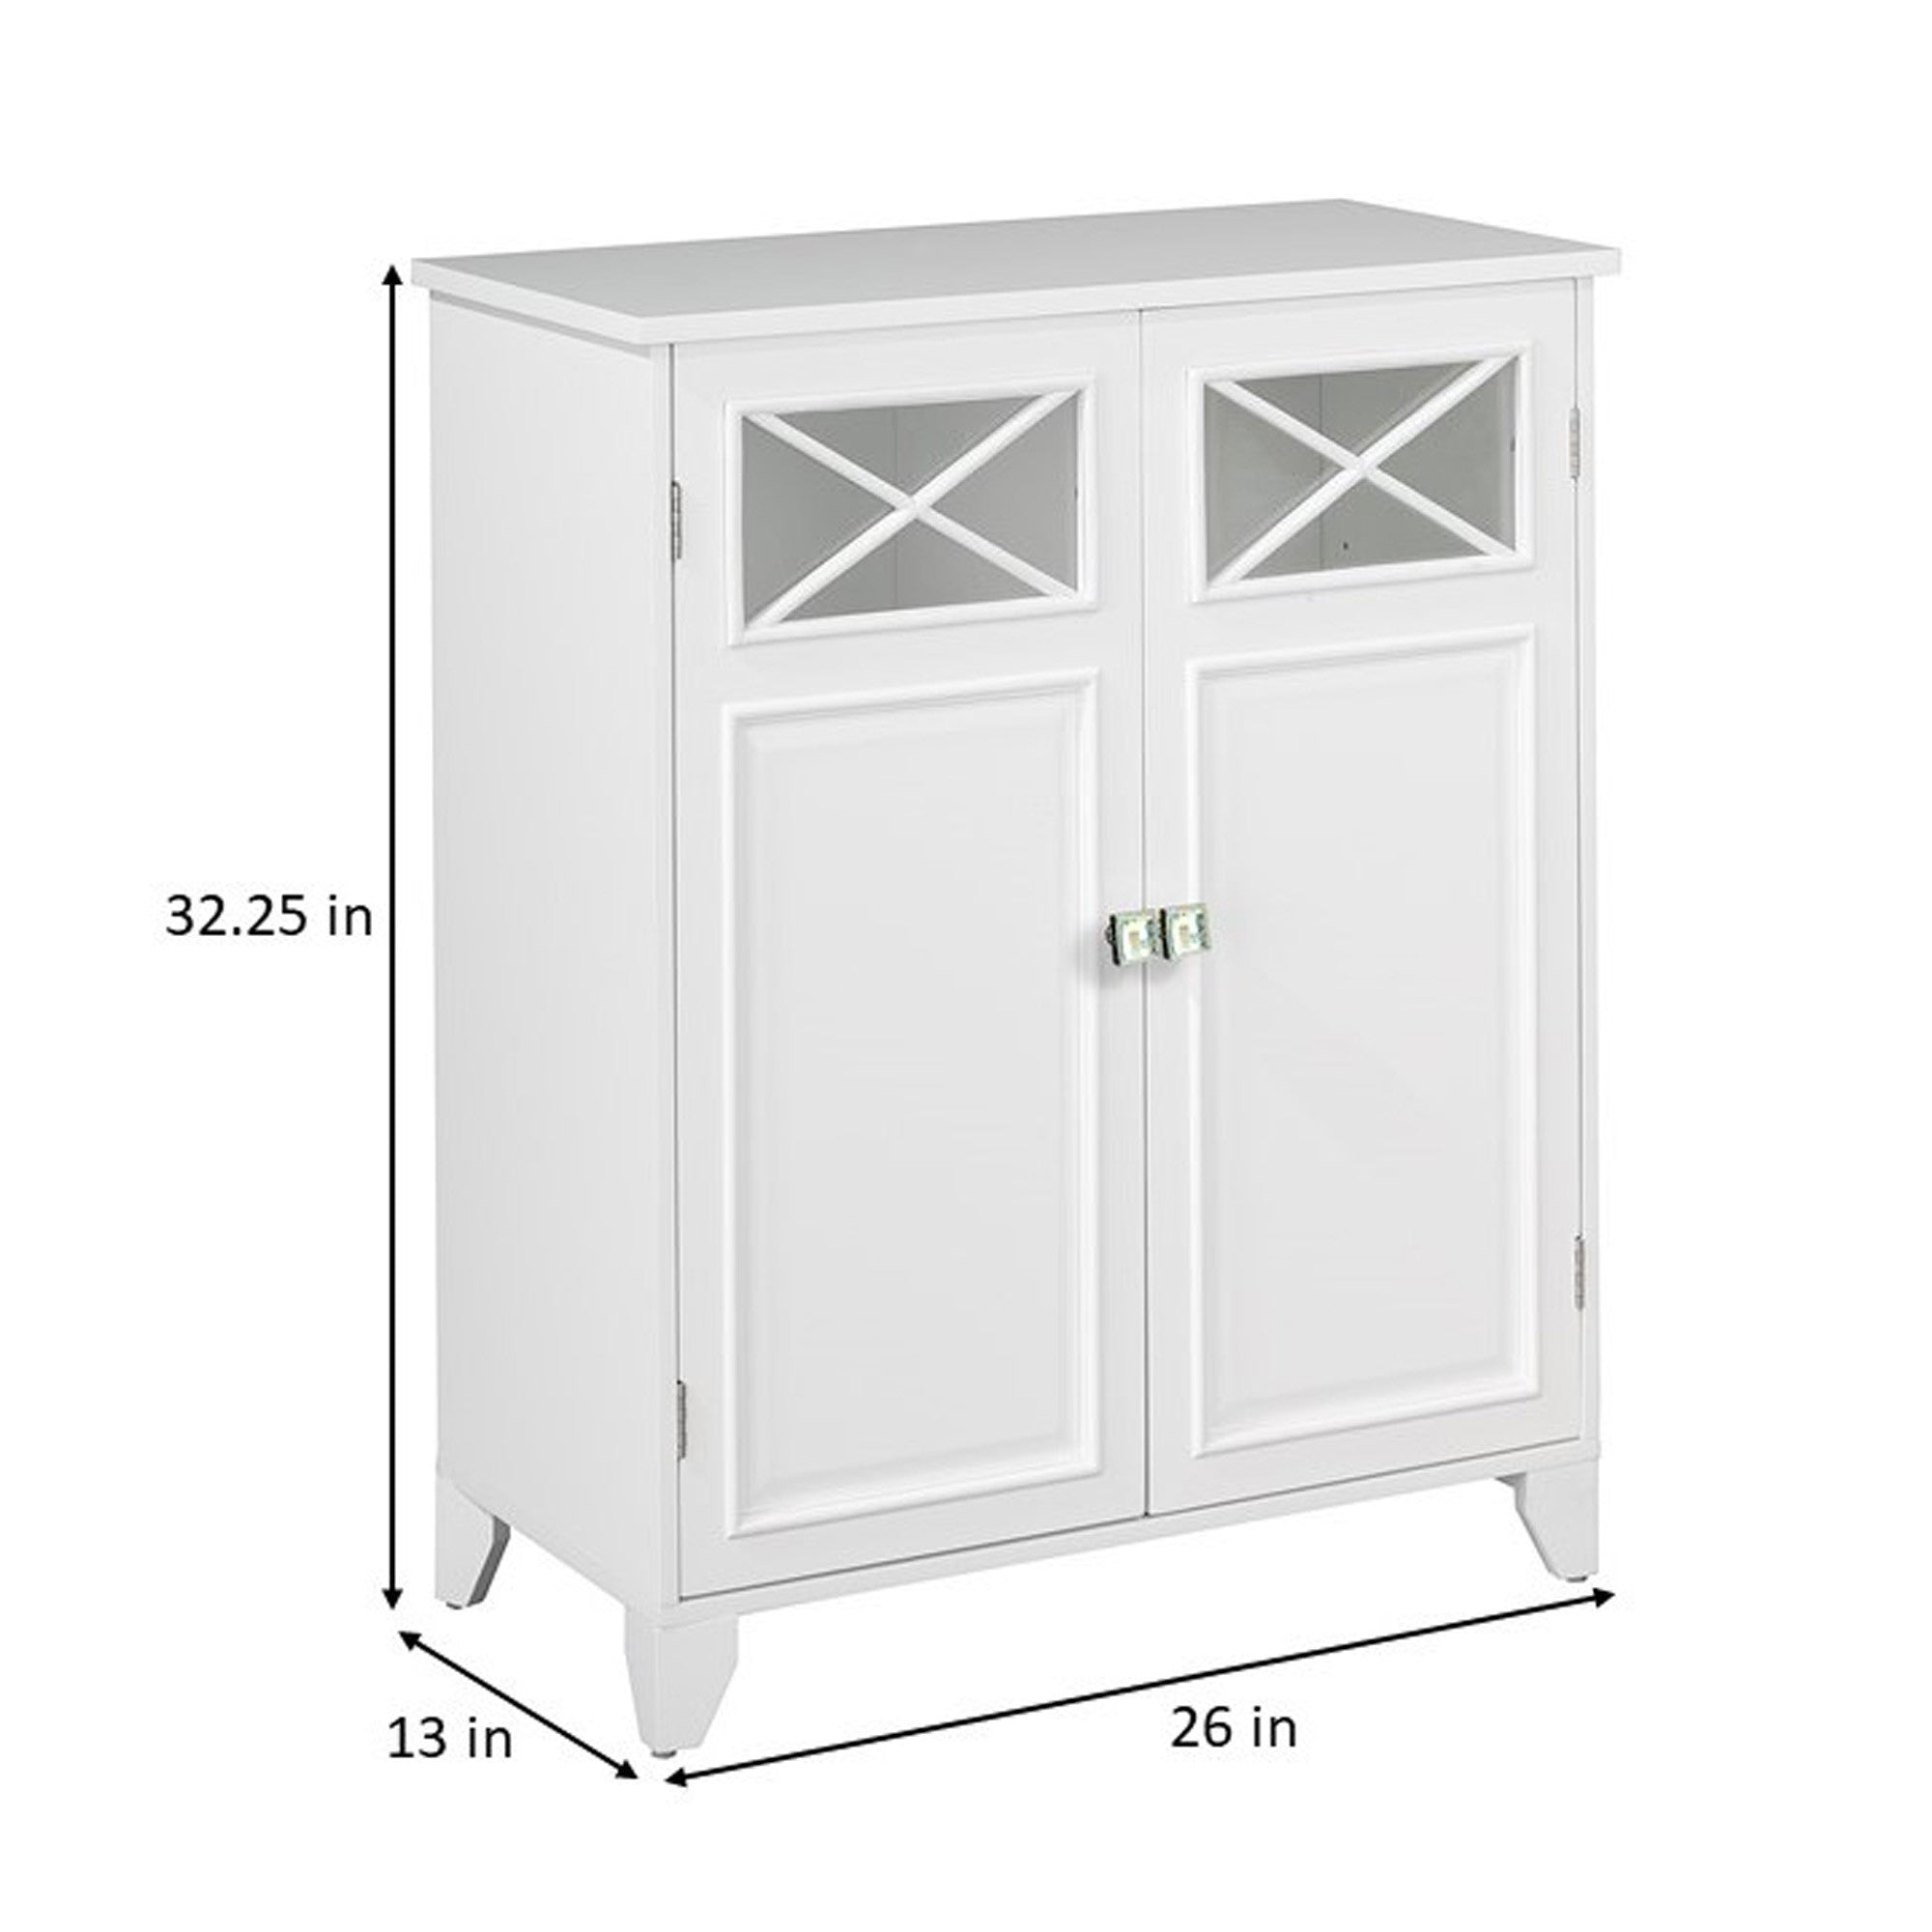 Teamson Home Dawson Free Standing Floor Storage Cabinet with Adjustable Shelves